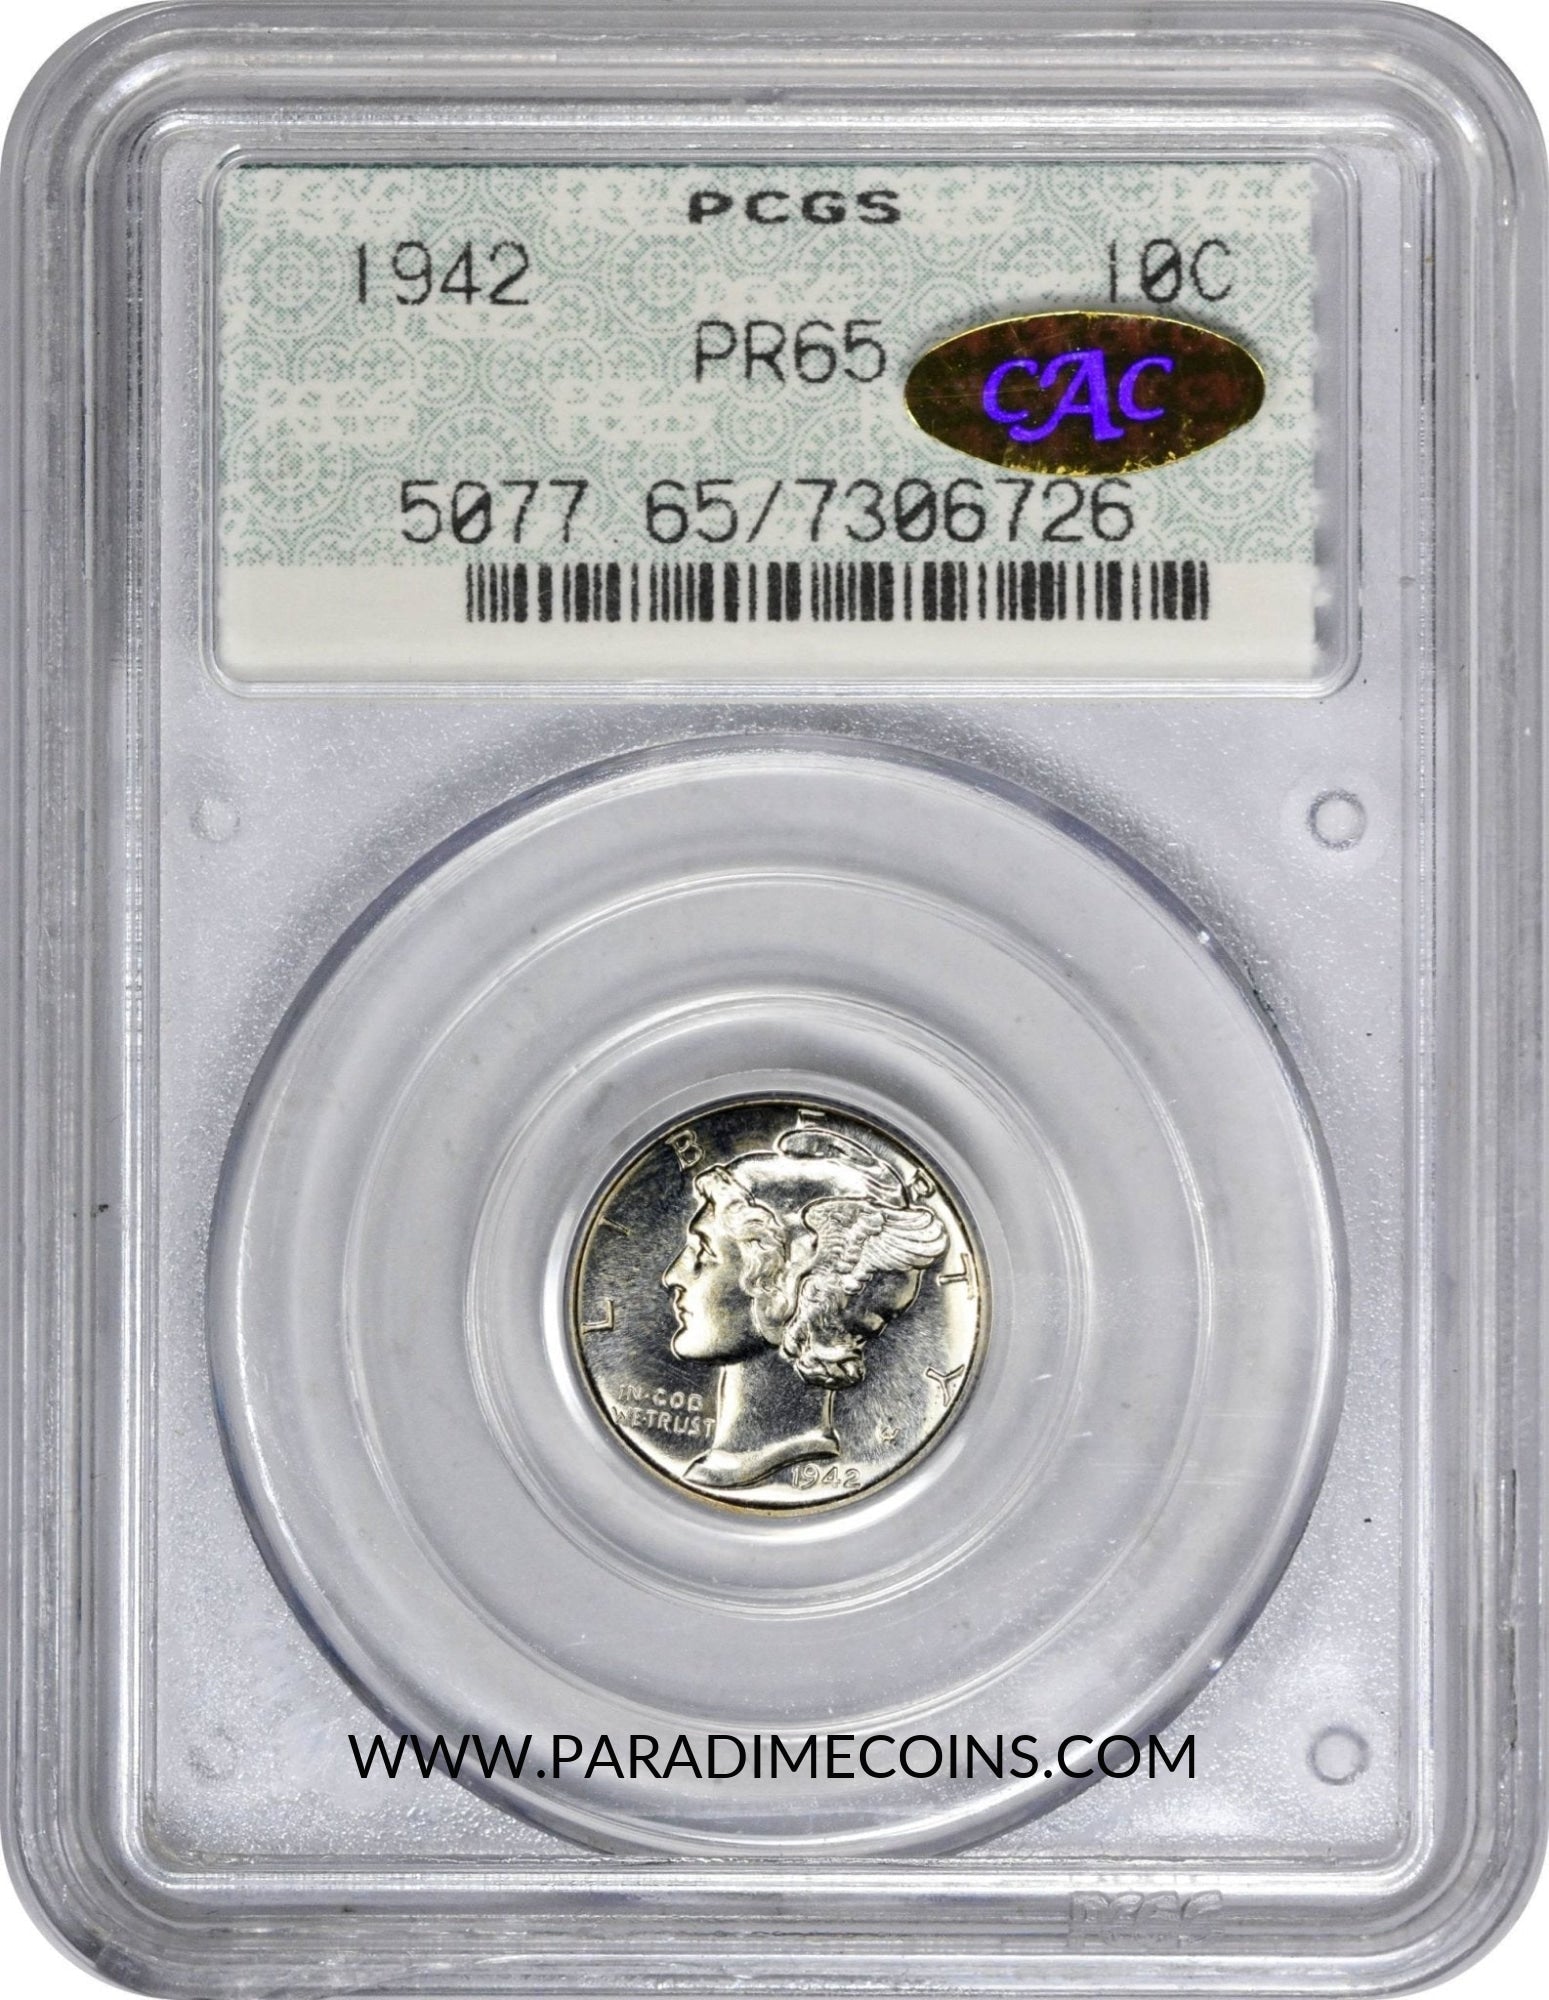 1942 10C PR65 Doily OGH PCGS GOLD CAC - Paradime Coins | PCGS NGC CACG CAC Rare US Numismatic Coins For Sale